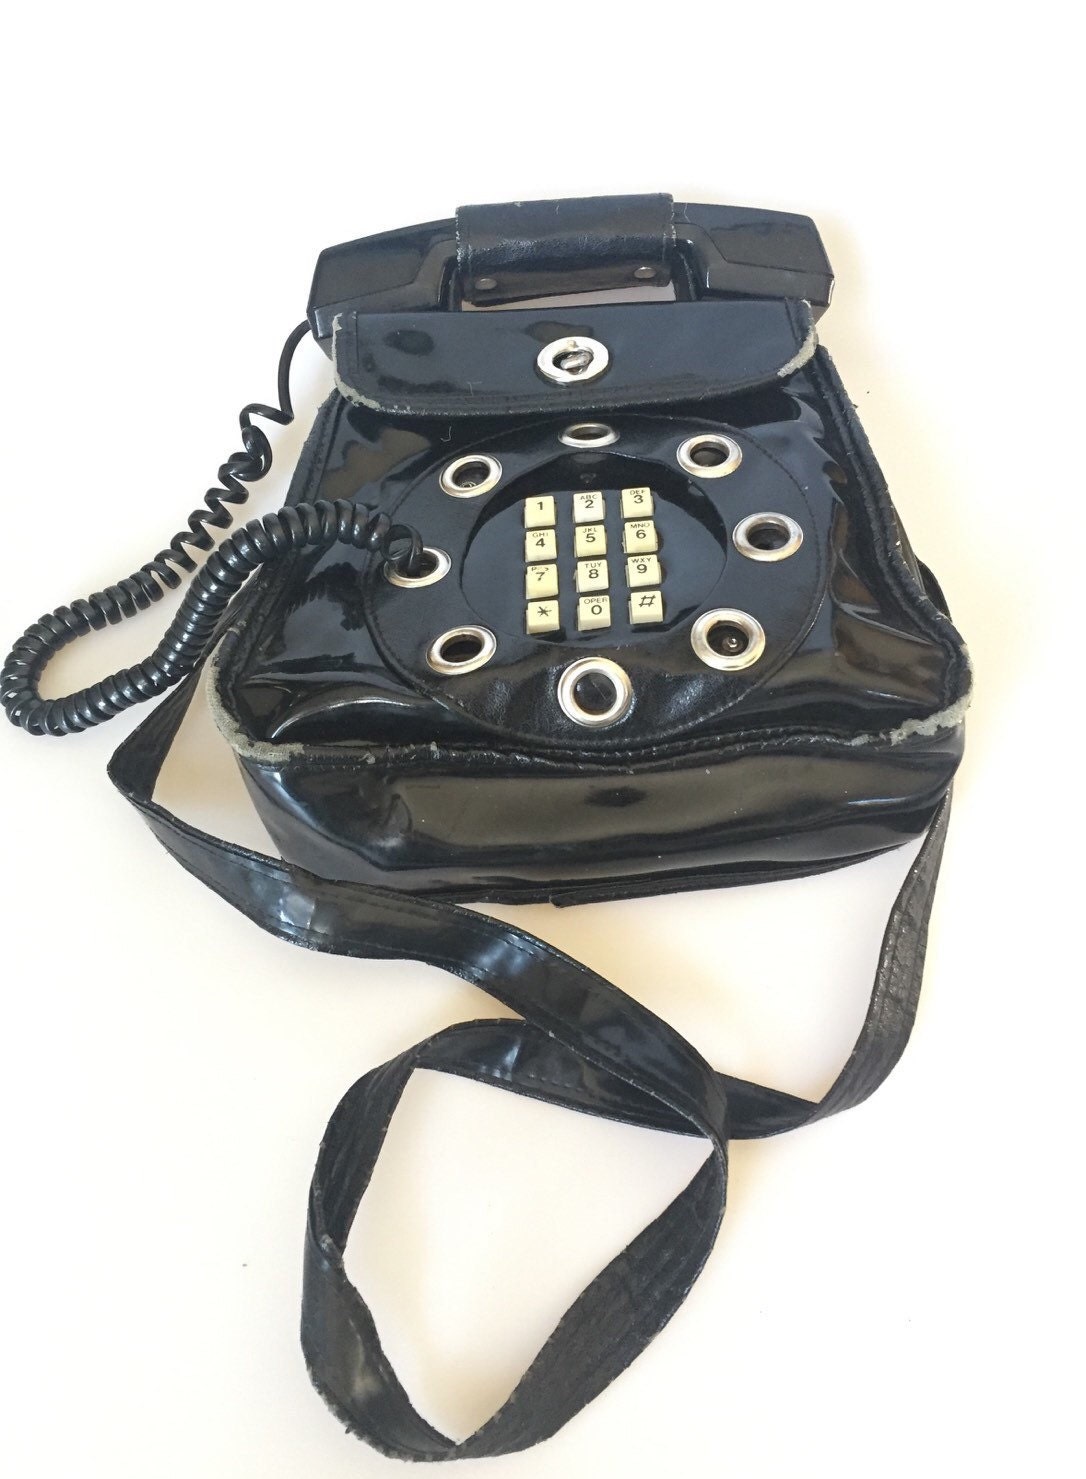 Dallas Handbags Vintage Telephone Purse Bag Kitsch